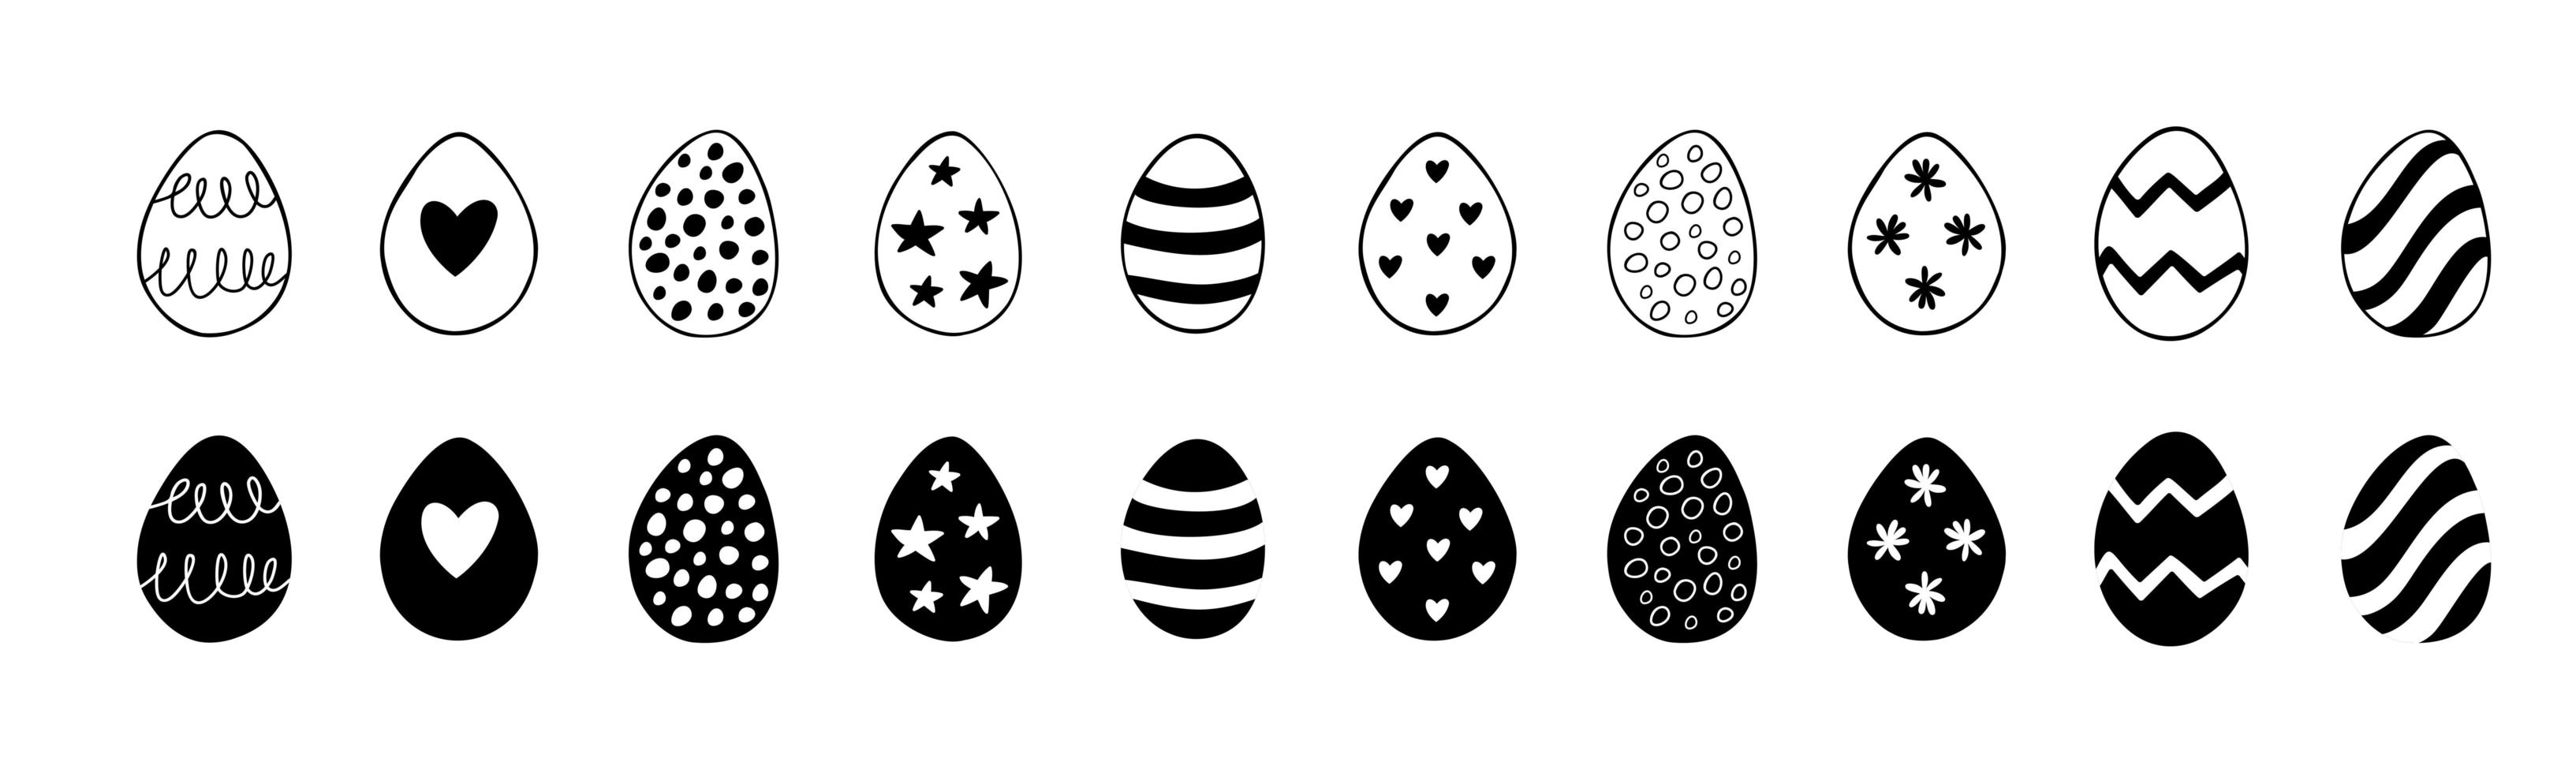 Páscoa conjunto de ilustrações de ovos de doodle isolado no fundo branco. vetor